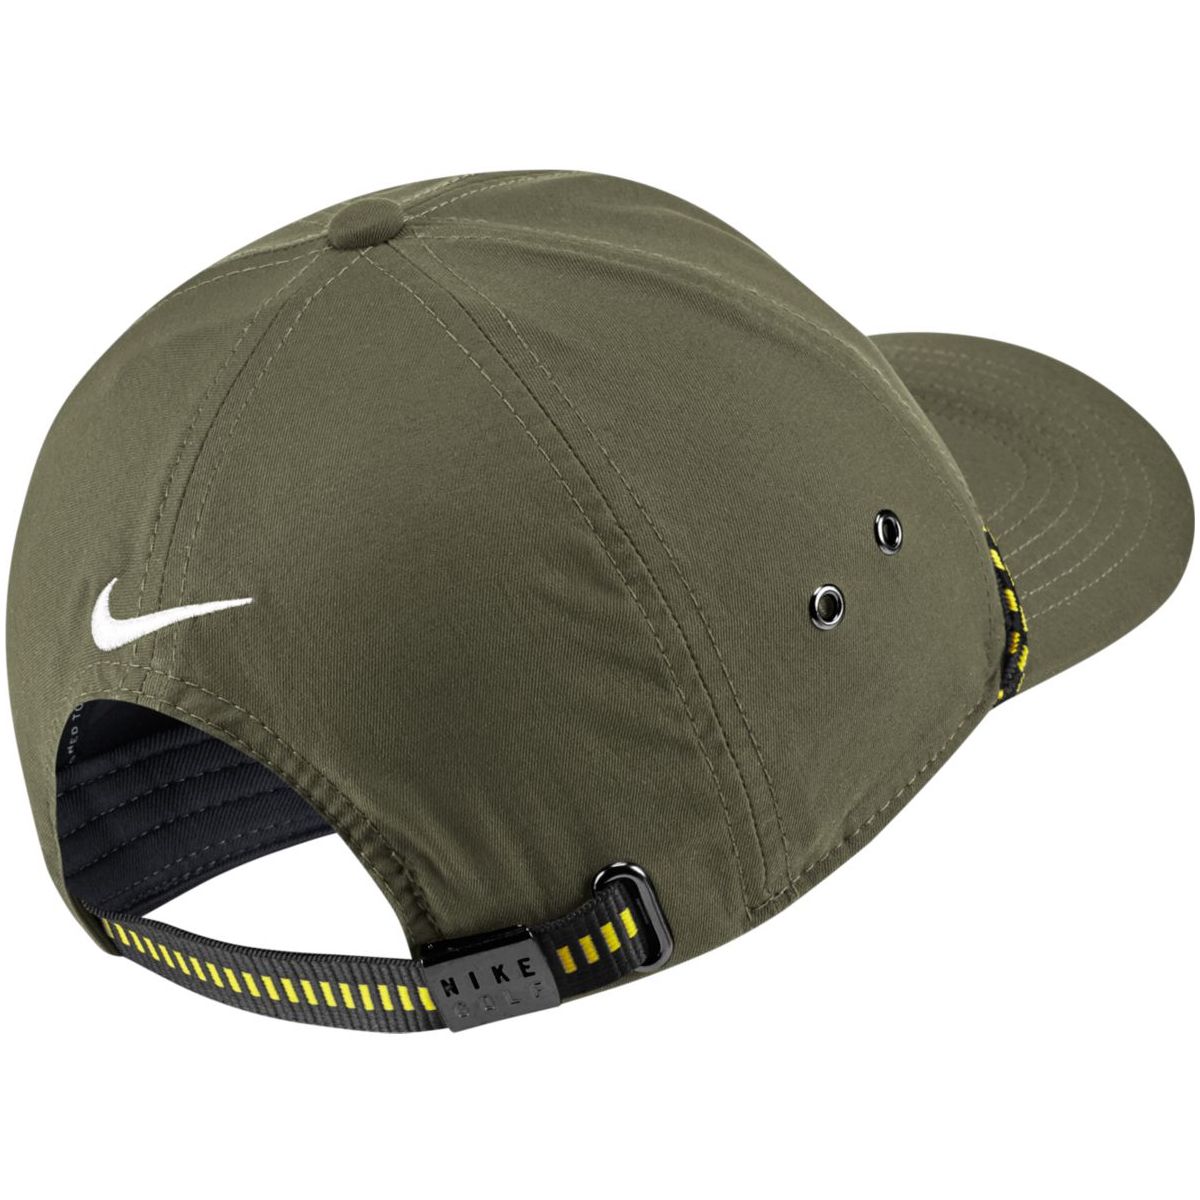 New York Knicks Nike AeroBill Classic99 Unisex Adjustable NBA Hat